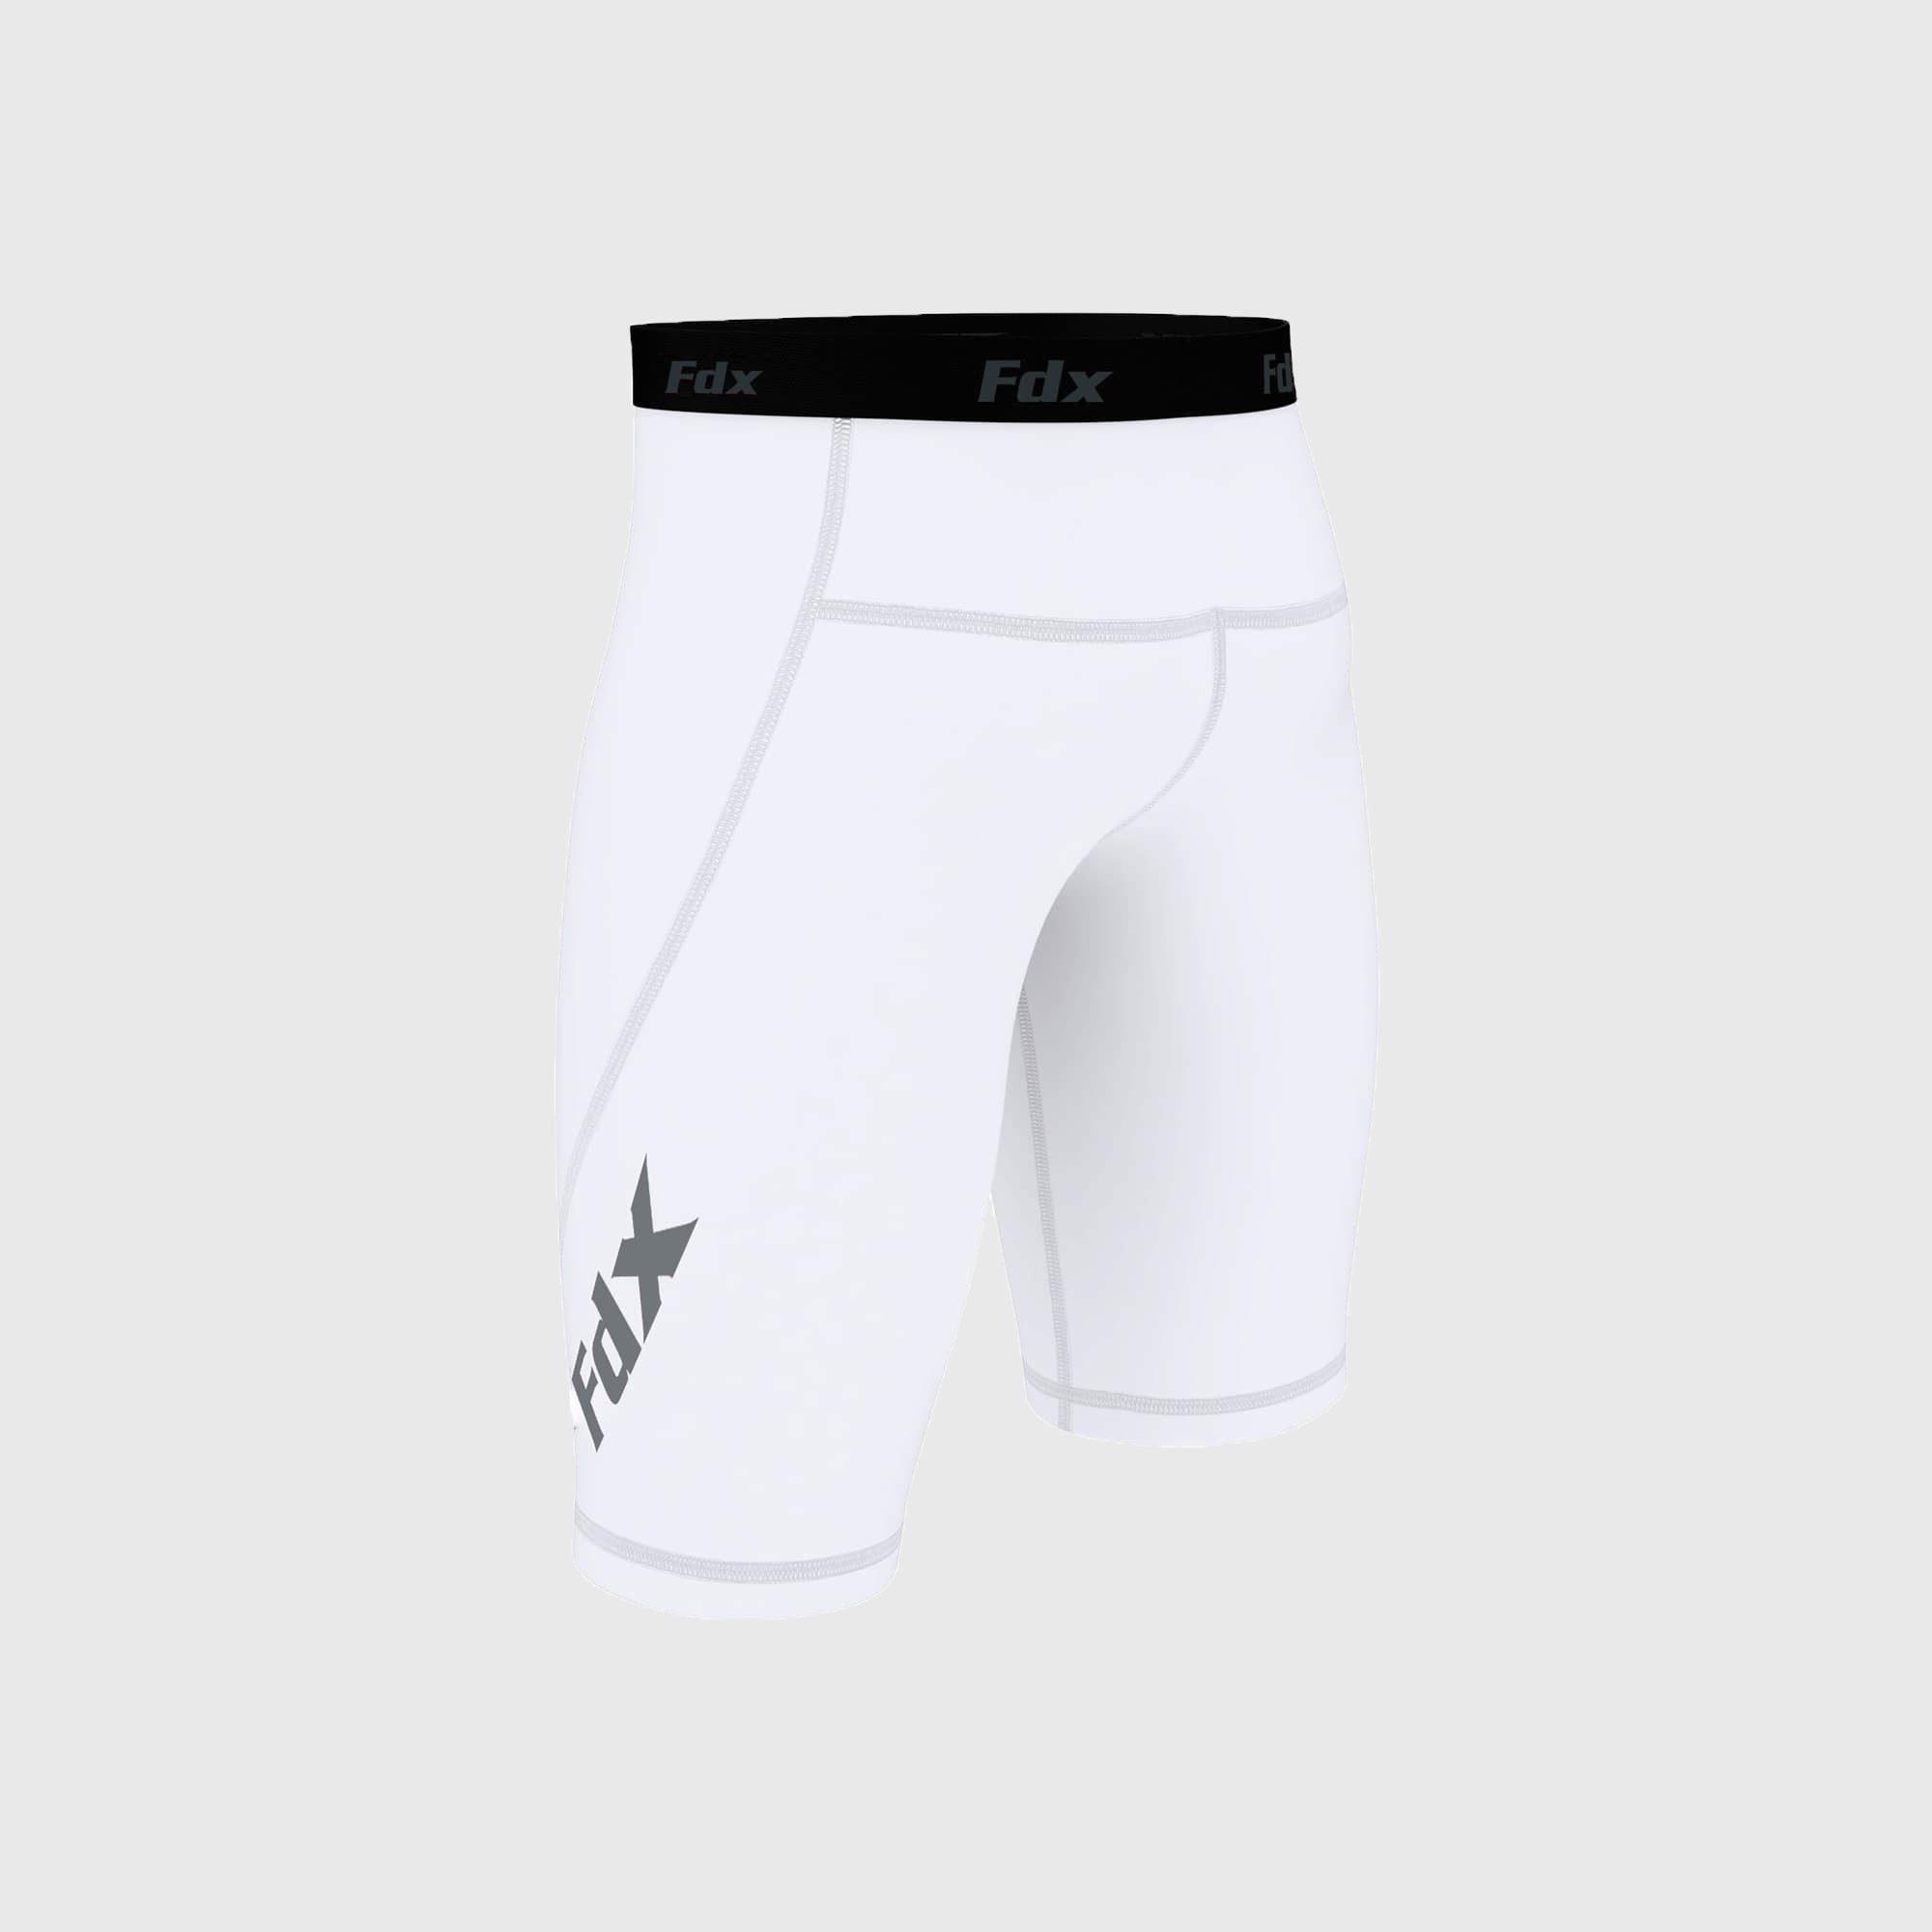 Fdx Men's White Compression Shorts Skin Tight Gym Pants